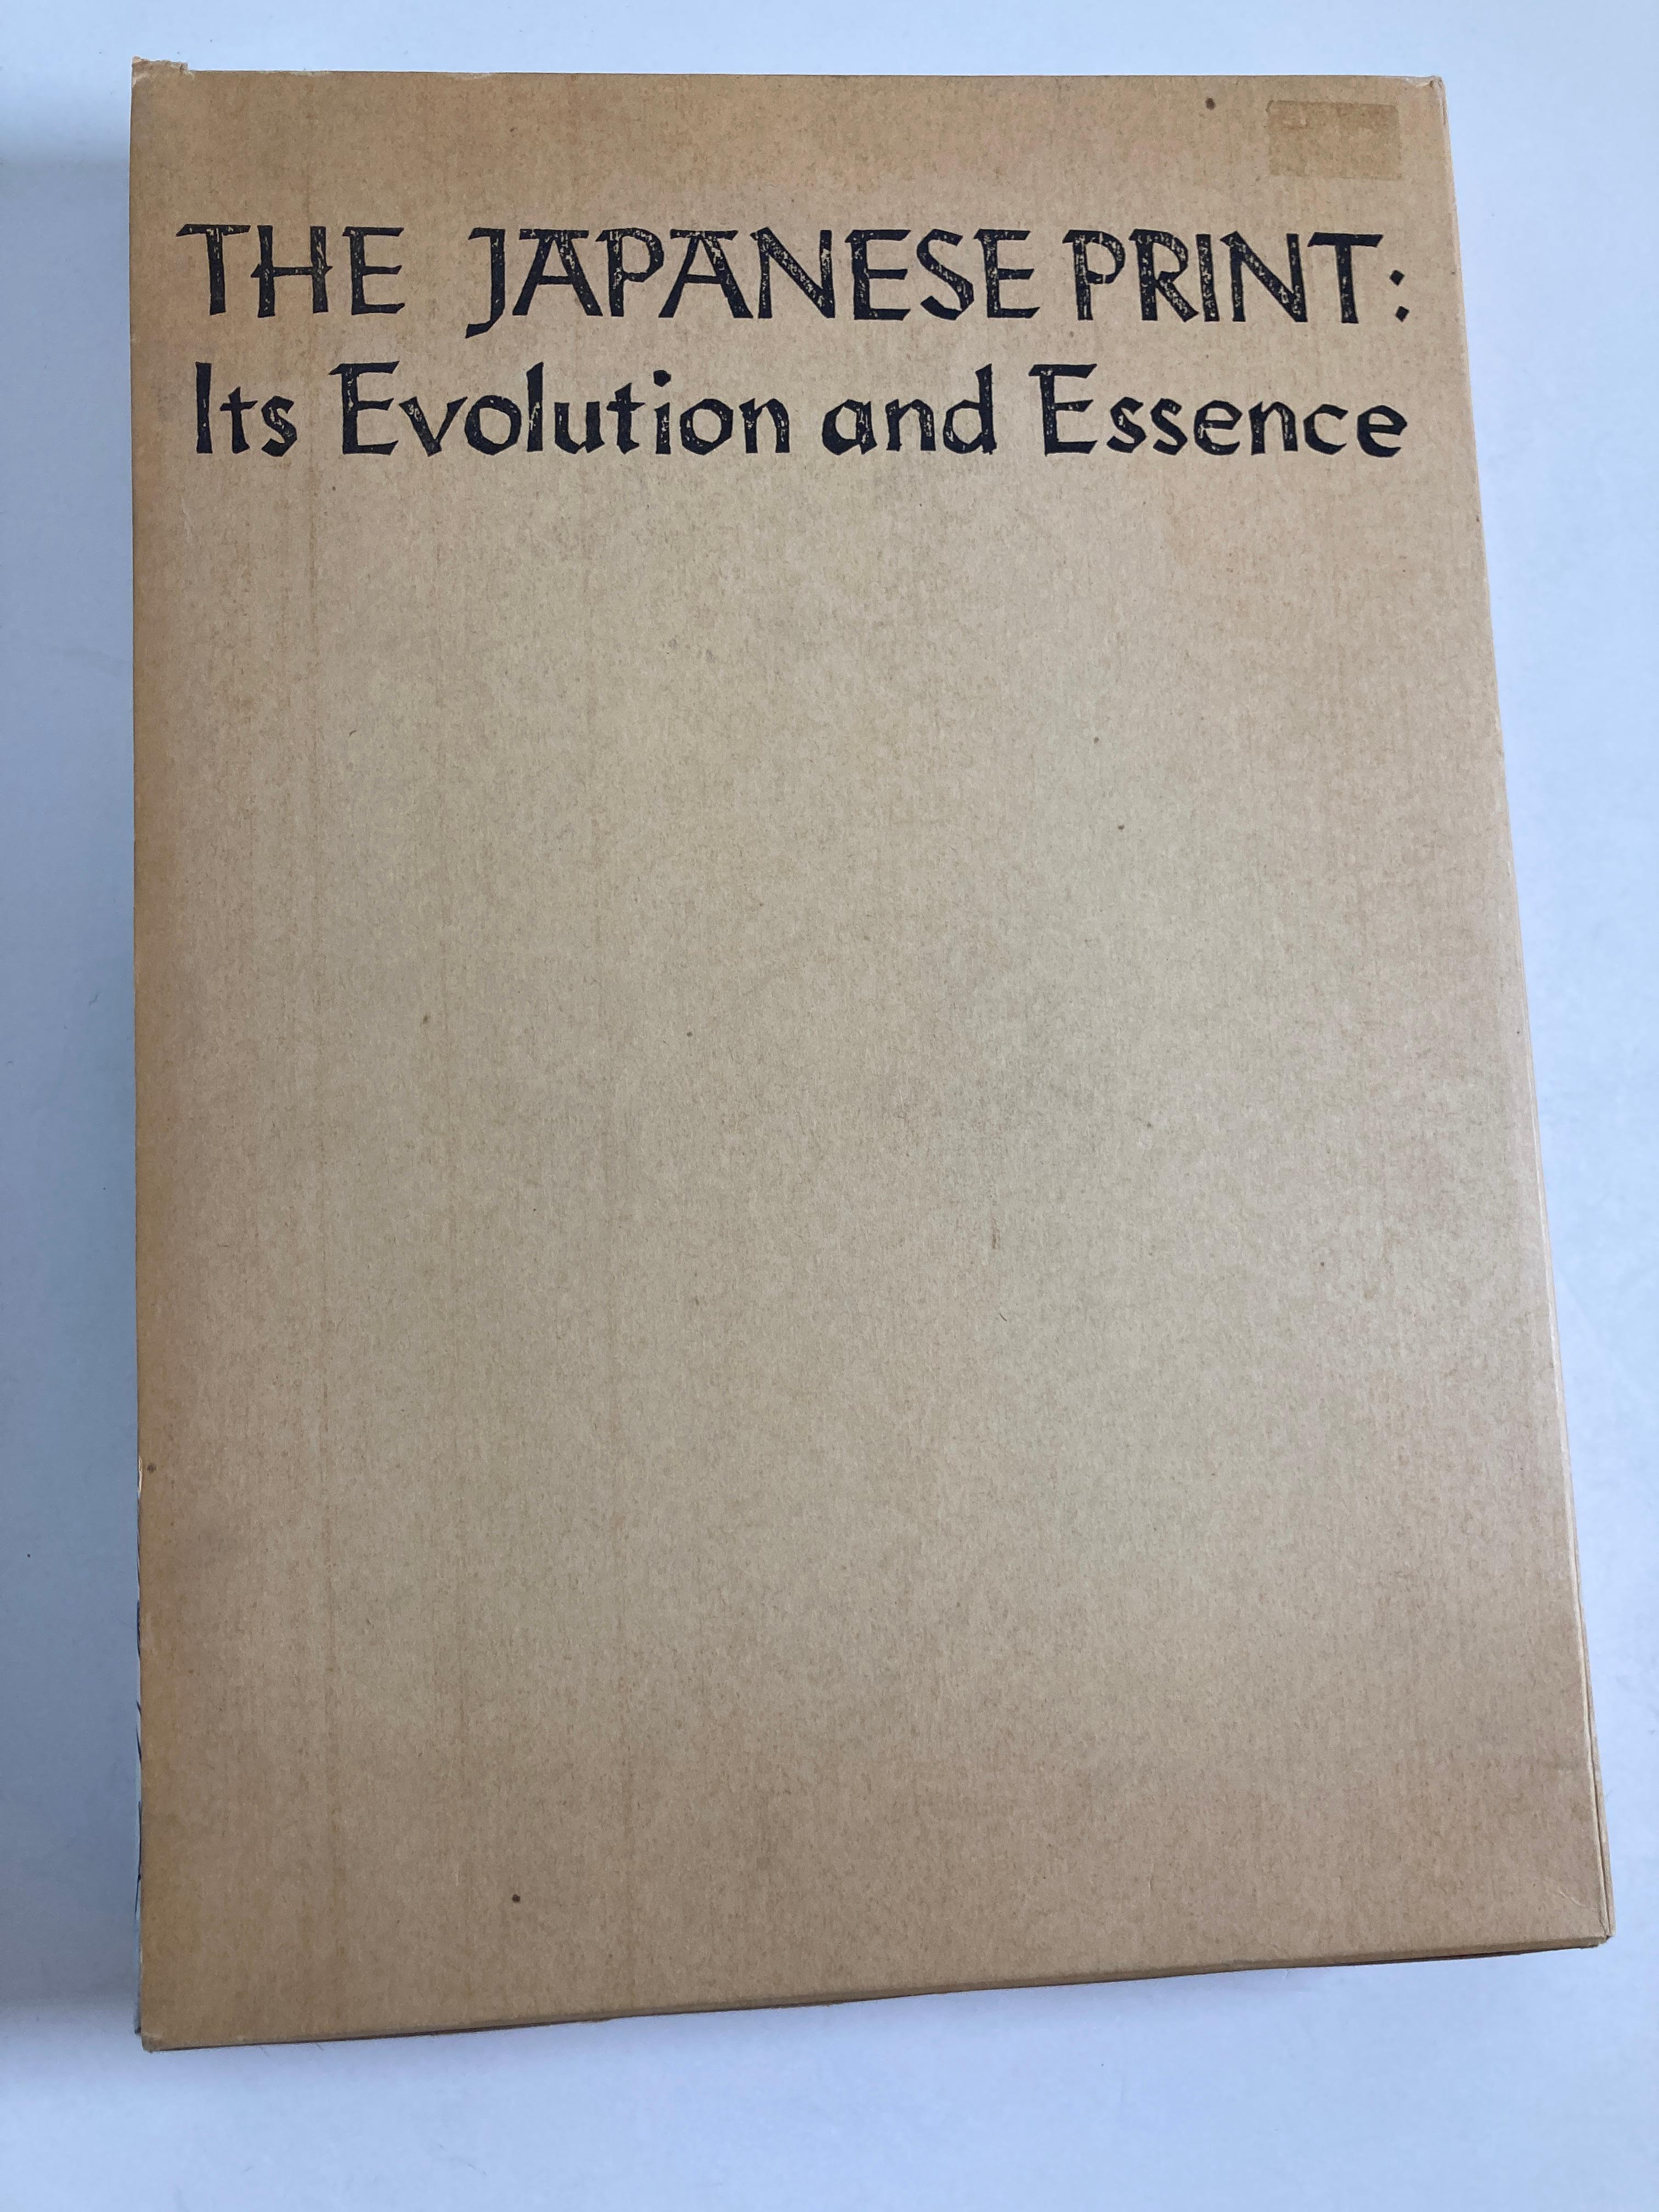 The Japanese print: its evolution and essence
Book by Muneshige Narazaki.
